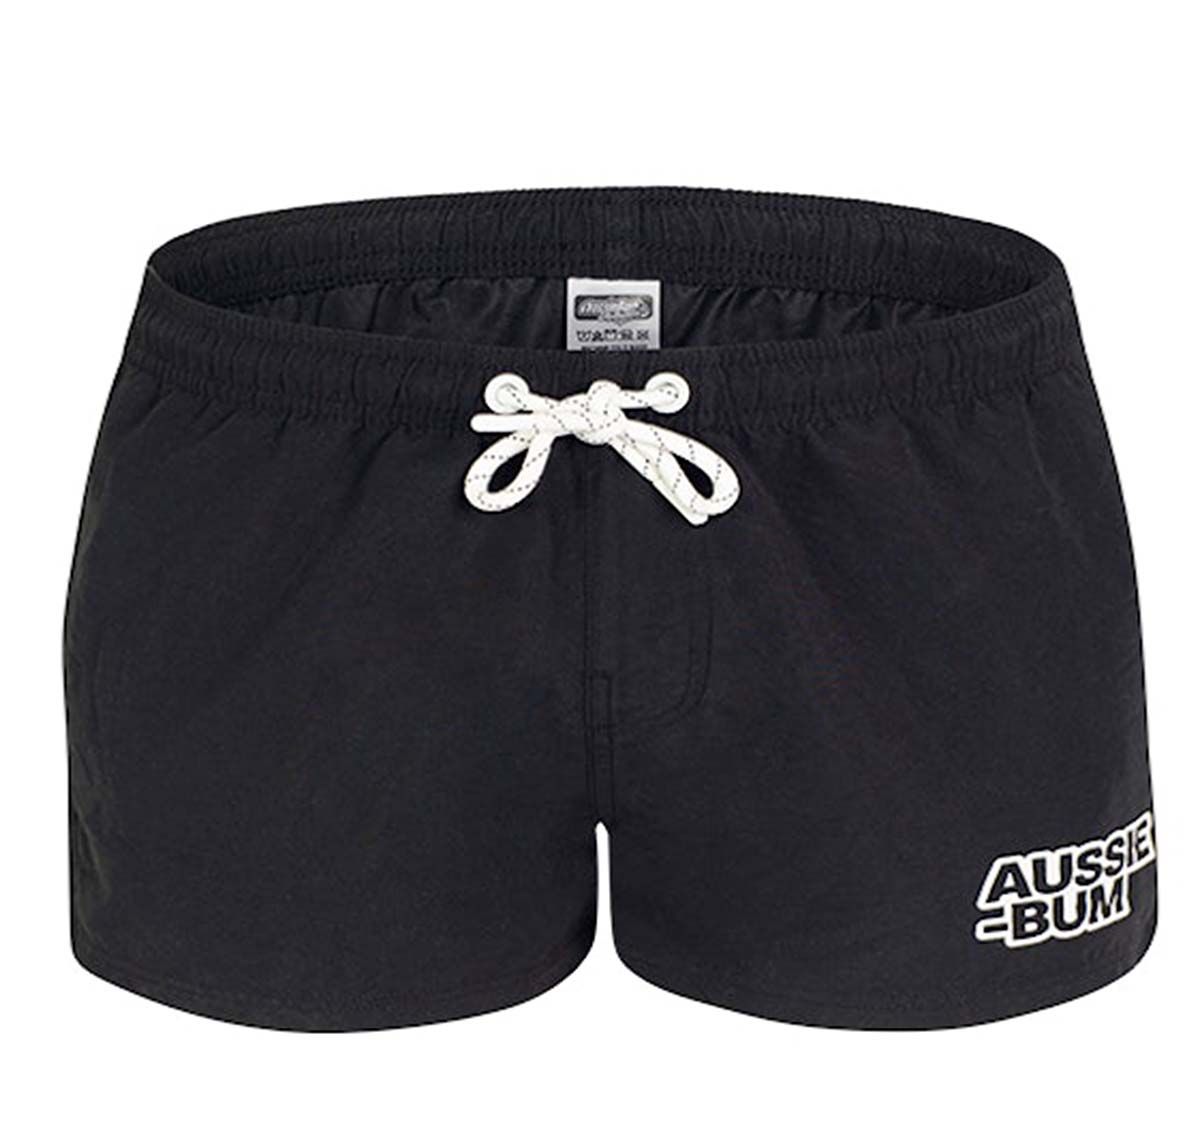 aussieBum swim shorts REEF BLACK Shorts, black